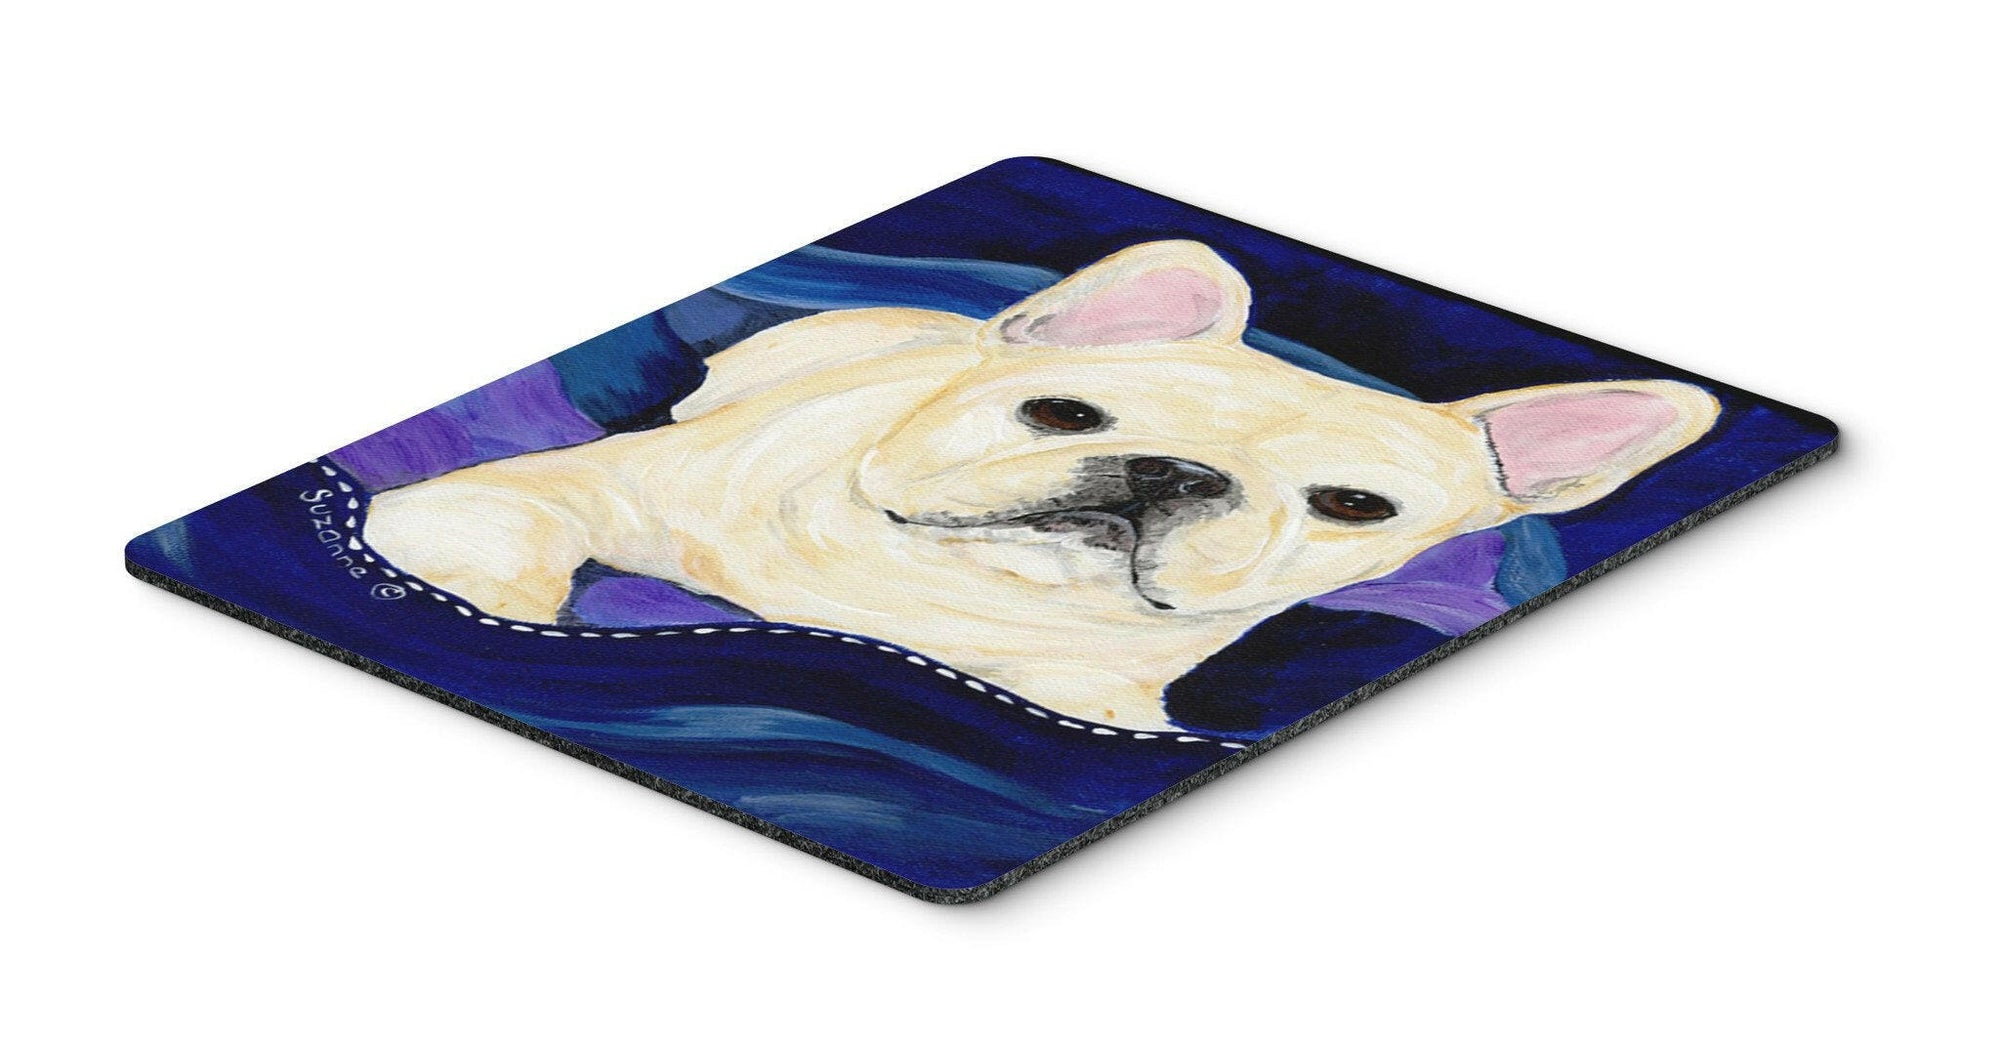 French Bulldog Mouse Pad / Hot Pad / Trivet by Caroline's Treasures